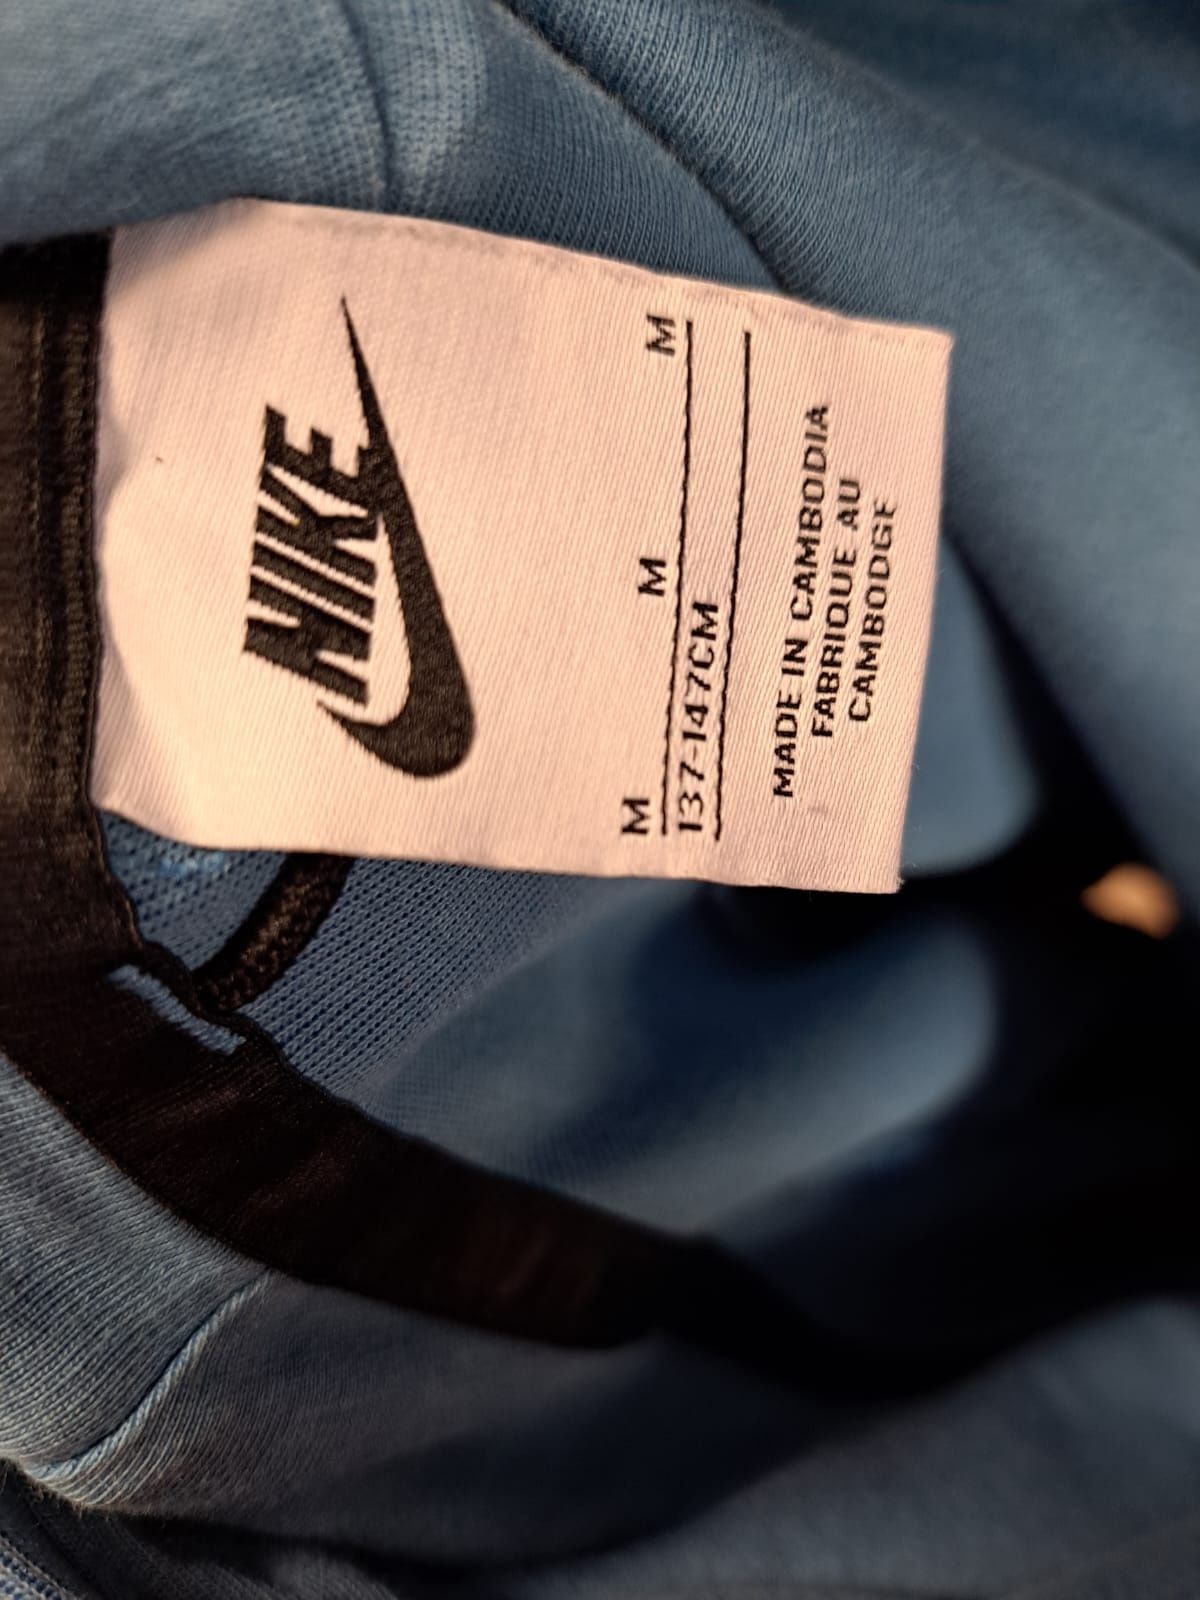 Vând Nike Tech fleece